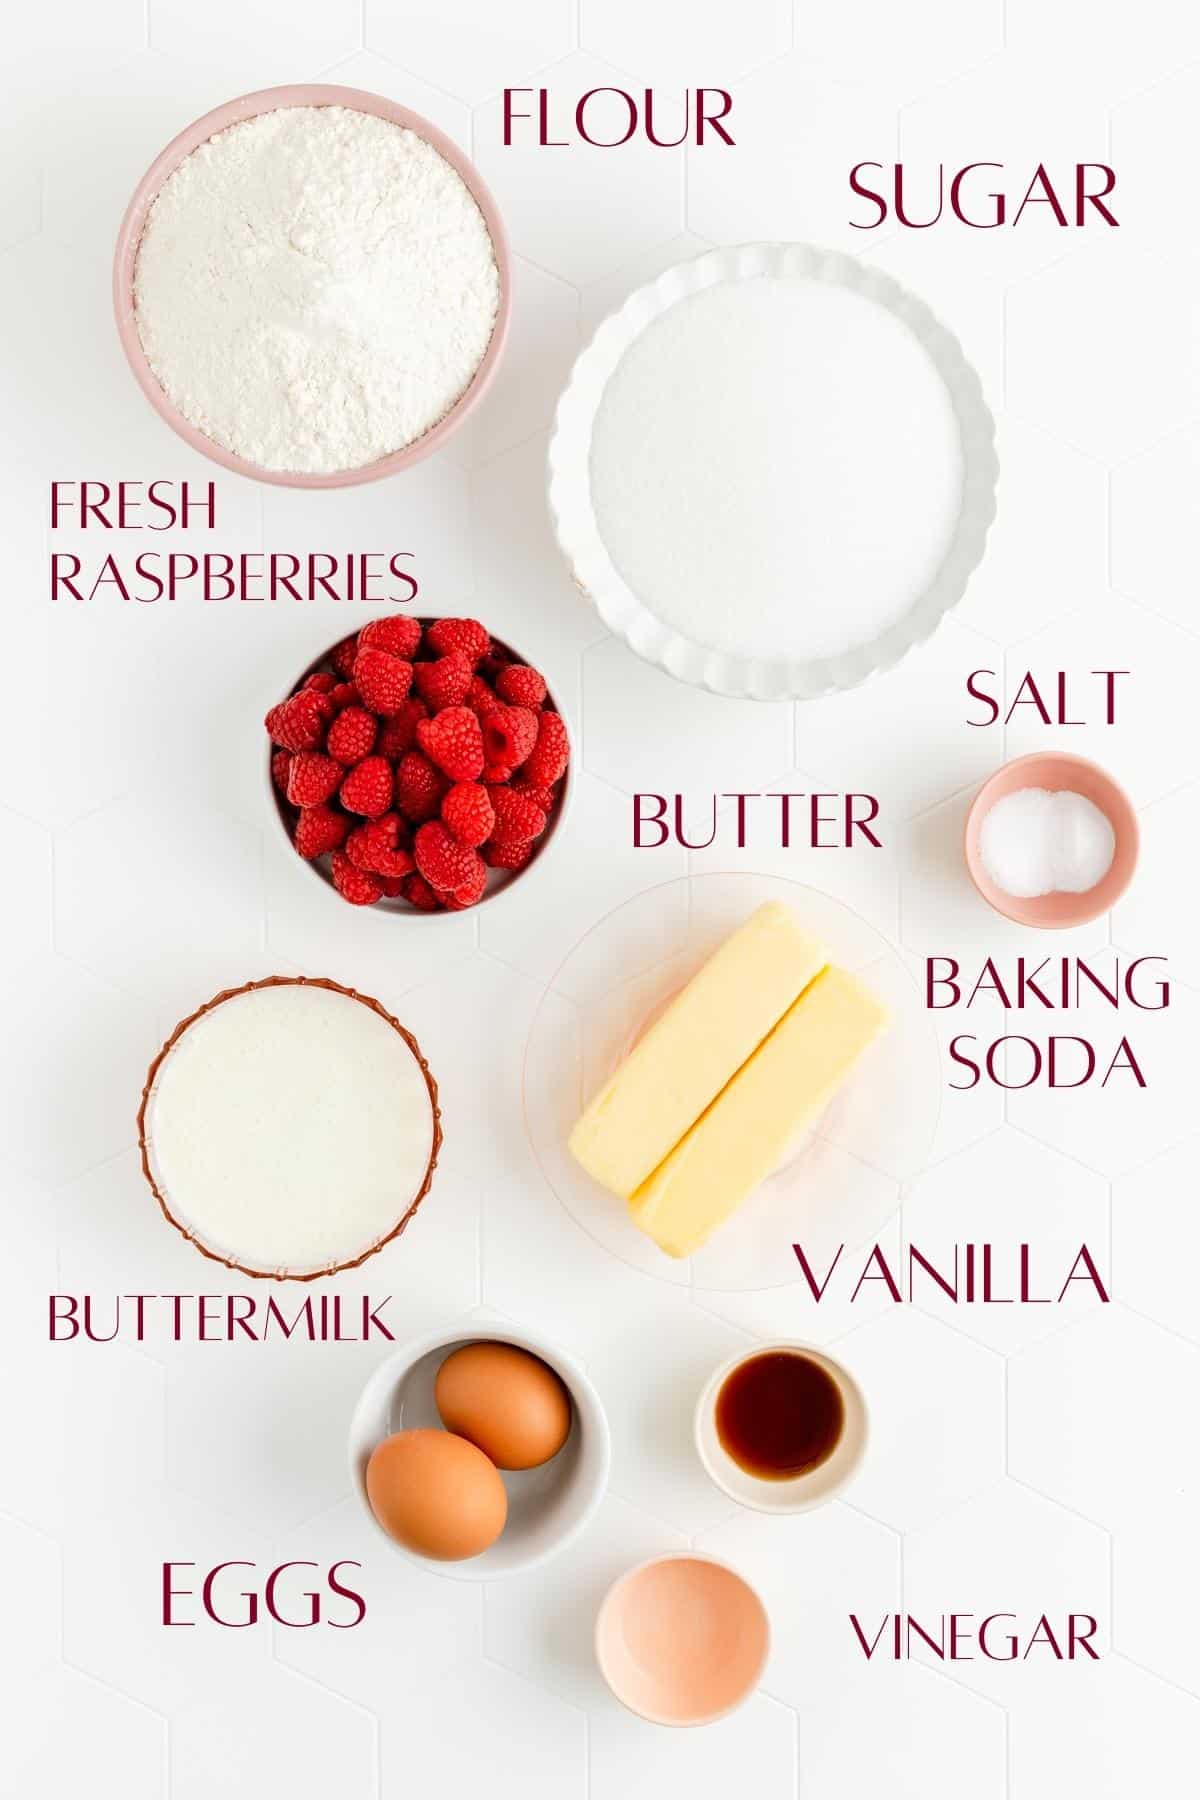 flour, sugar, raspberries, salt, butter, baking soda, buttermilk, vanilla, eggs, and vinegar in individual bowls.